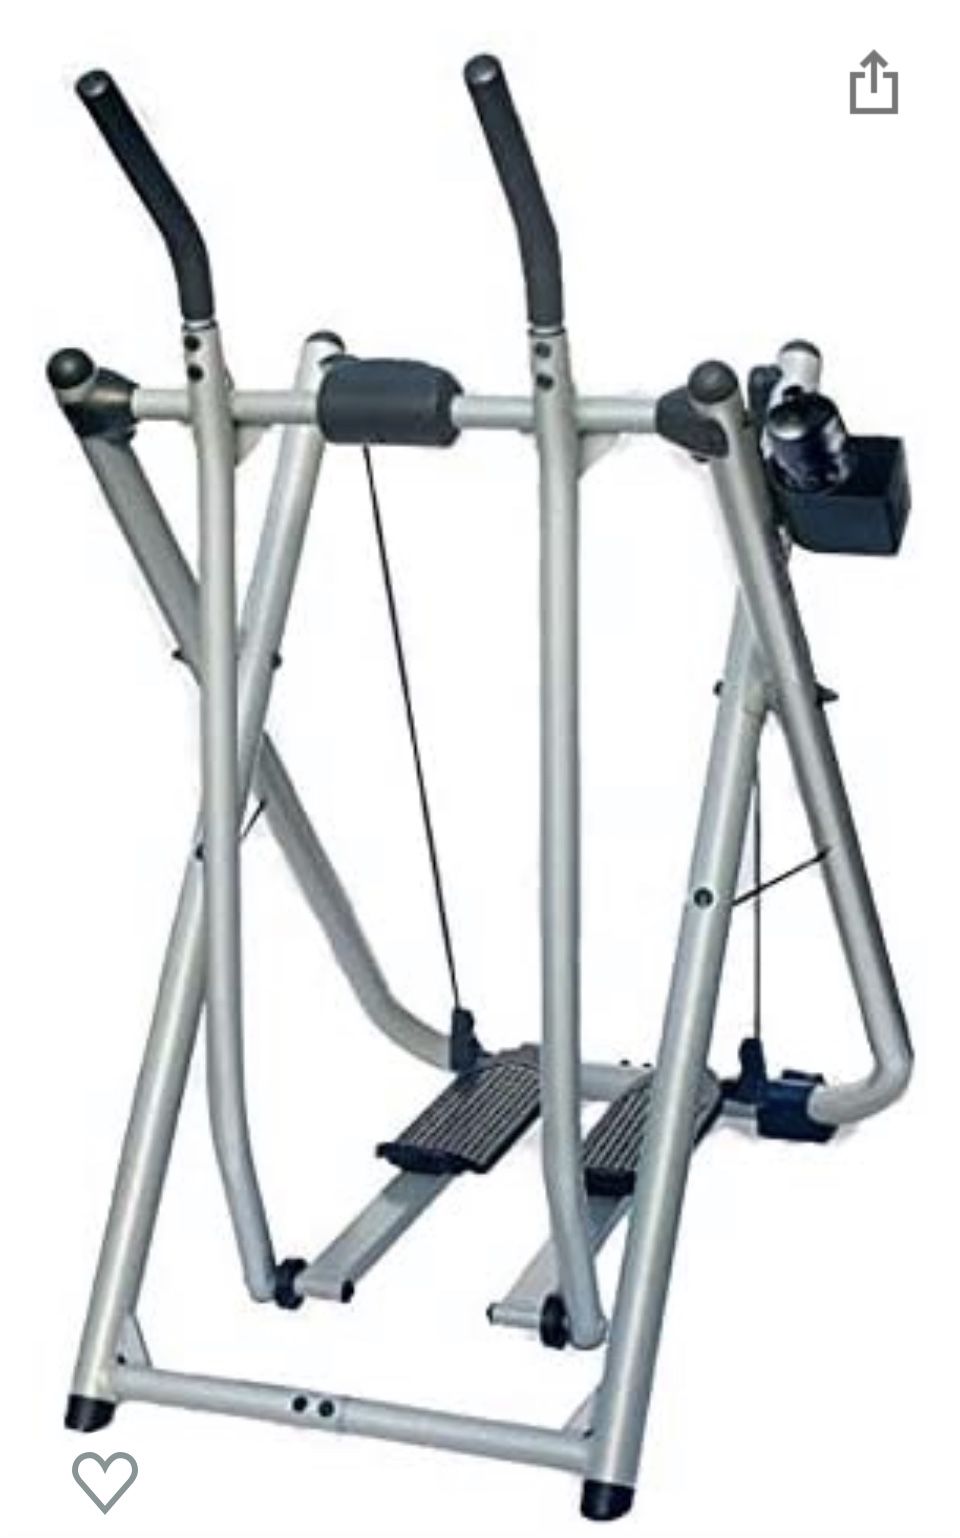 Gazelle Exercise Equipment Excellent Condition $50